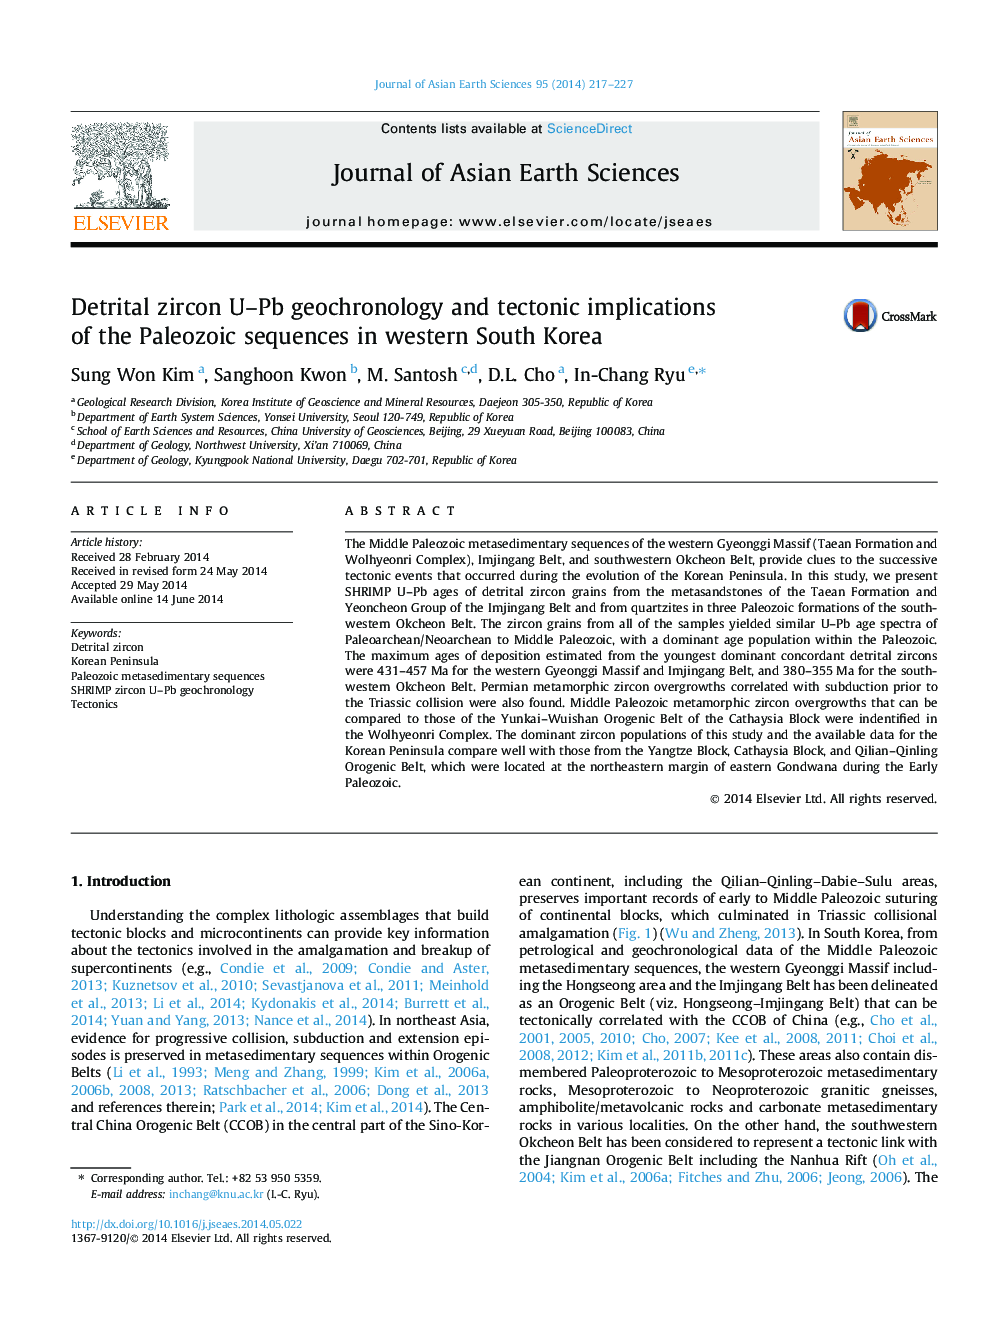 Detrital zircon U-Pb geochronology and tectonic implications of the Paleozoic sequences in western South Korea